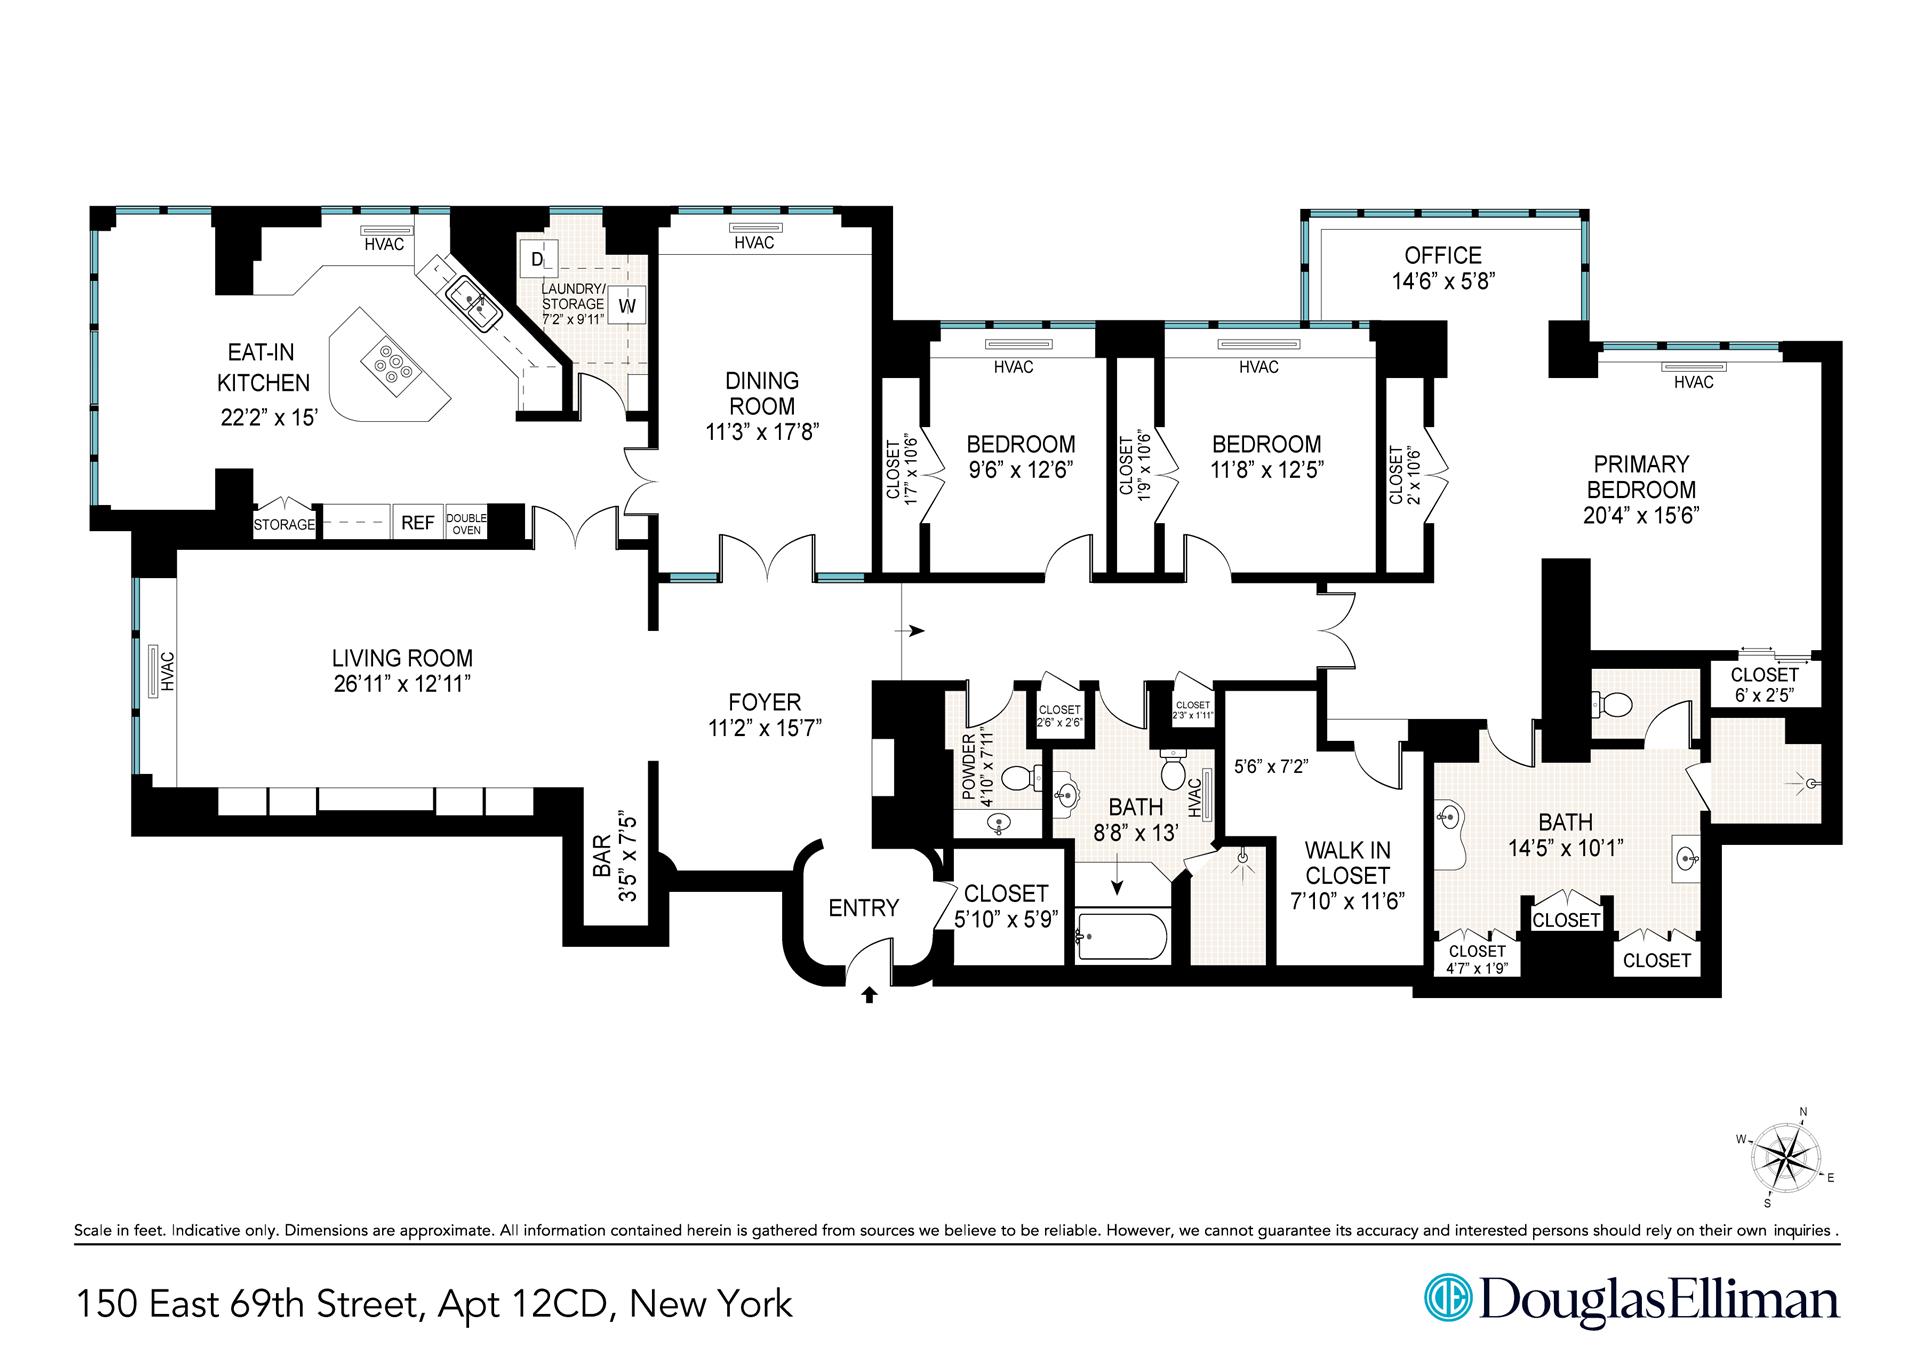 Floorplan for 150 East 69th Street, 12CD